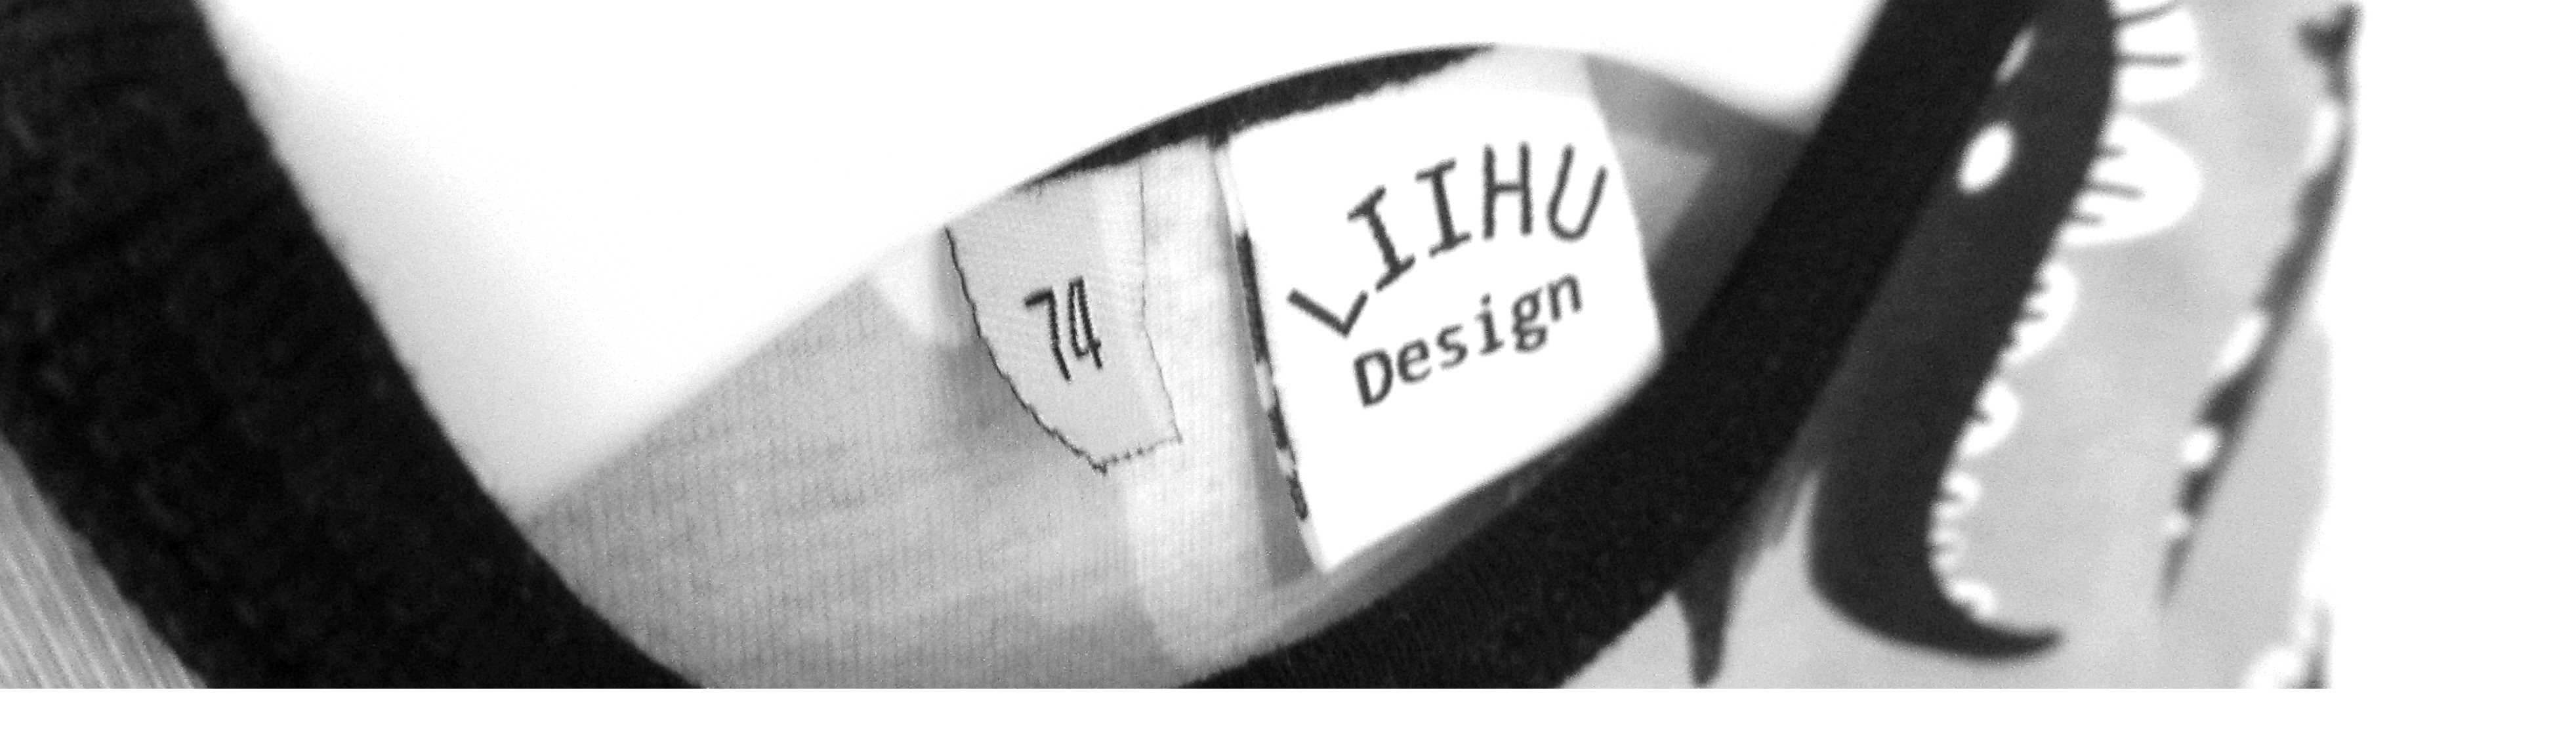 Liihu Design